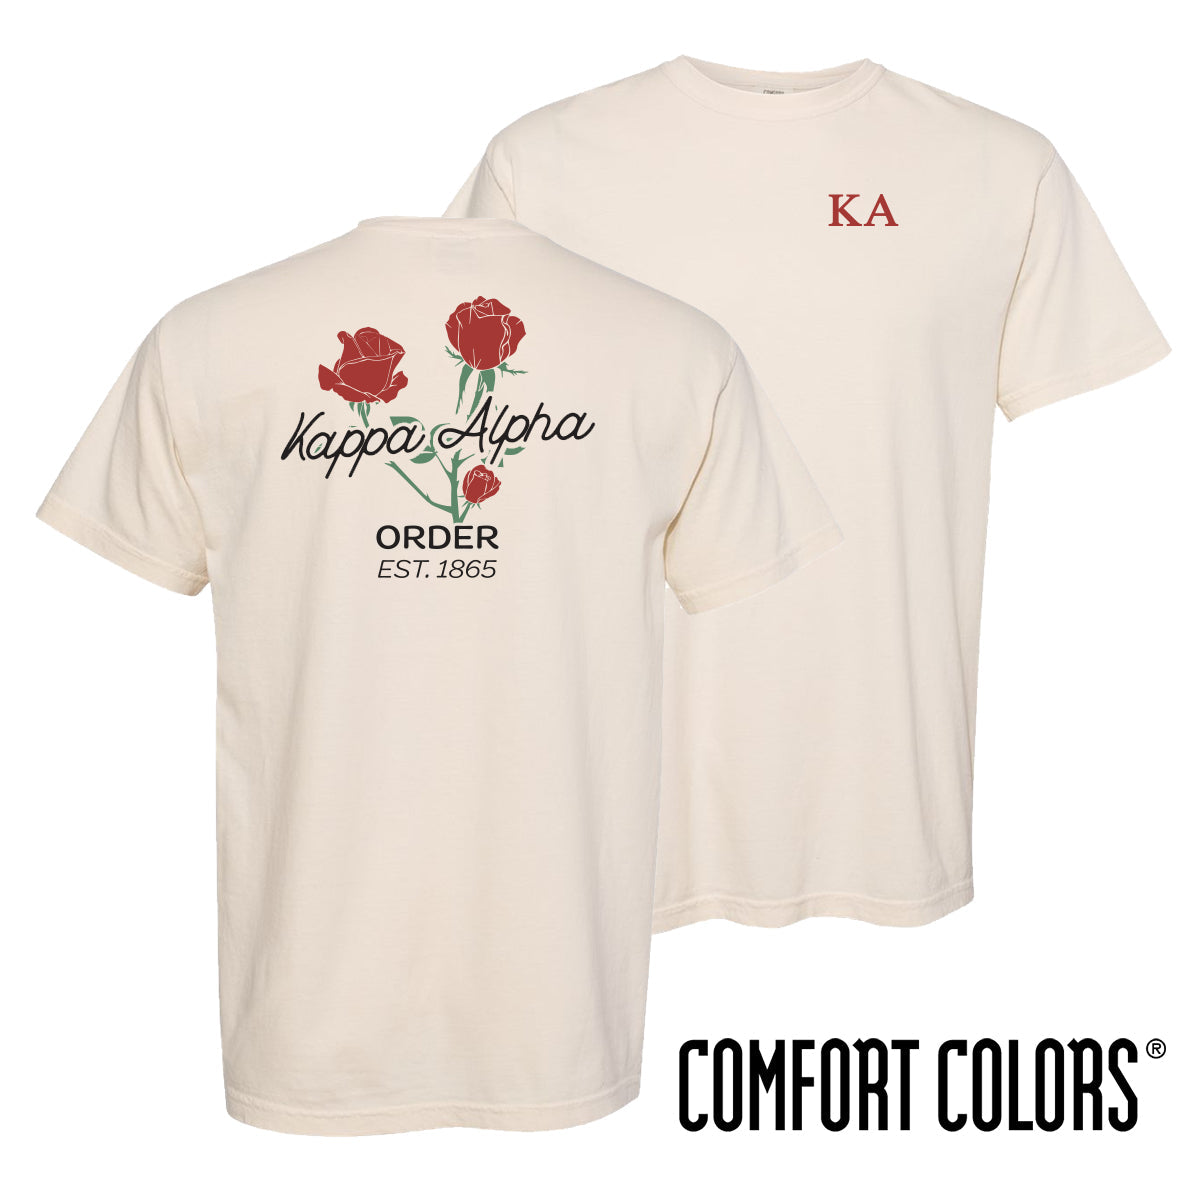 New! Kappa Alpha Comfort Colors Rosebud Ivory Short Sleeve Tee